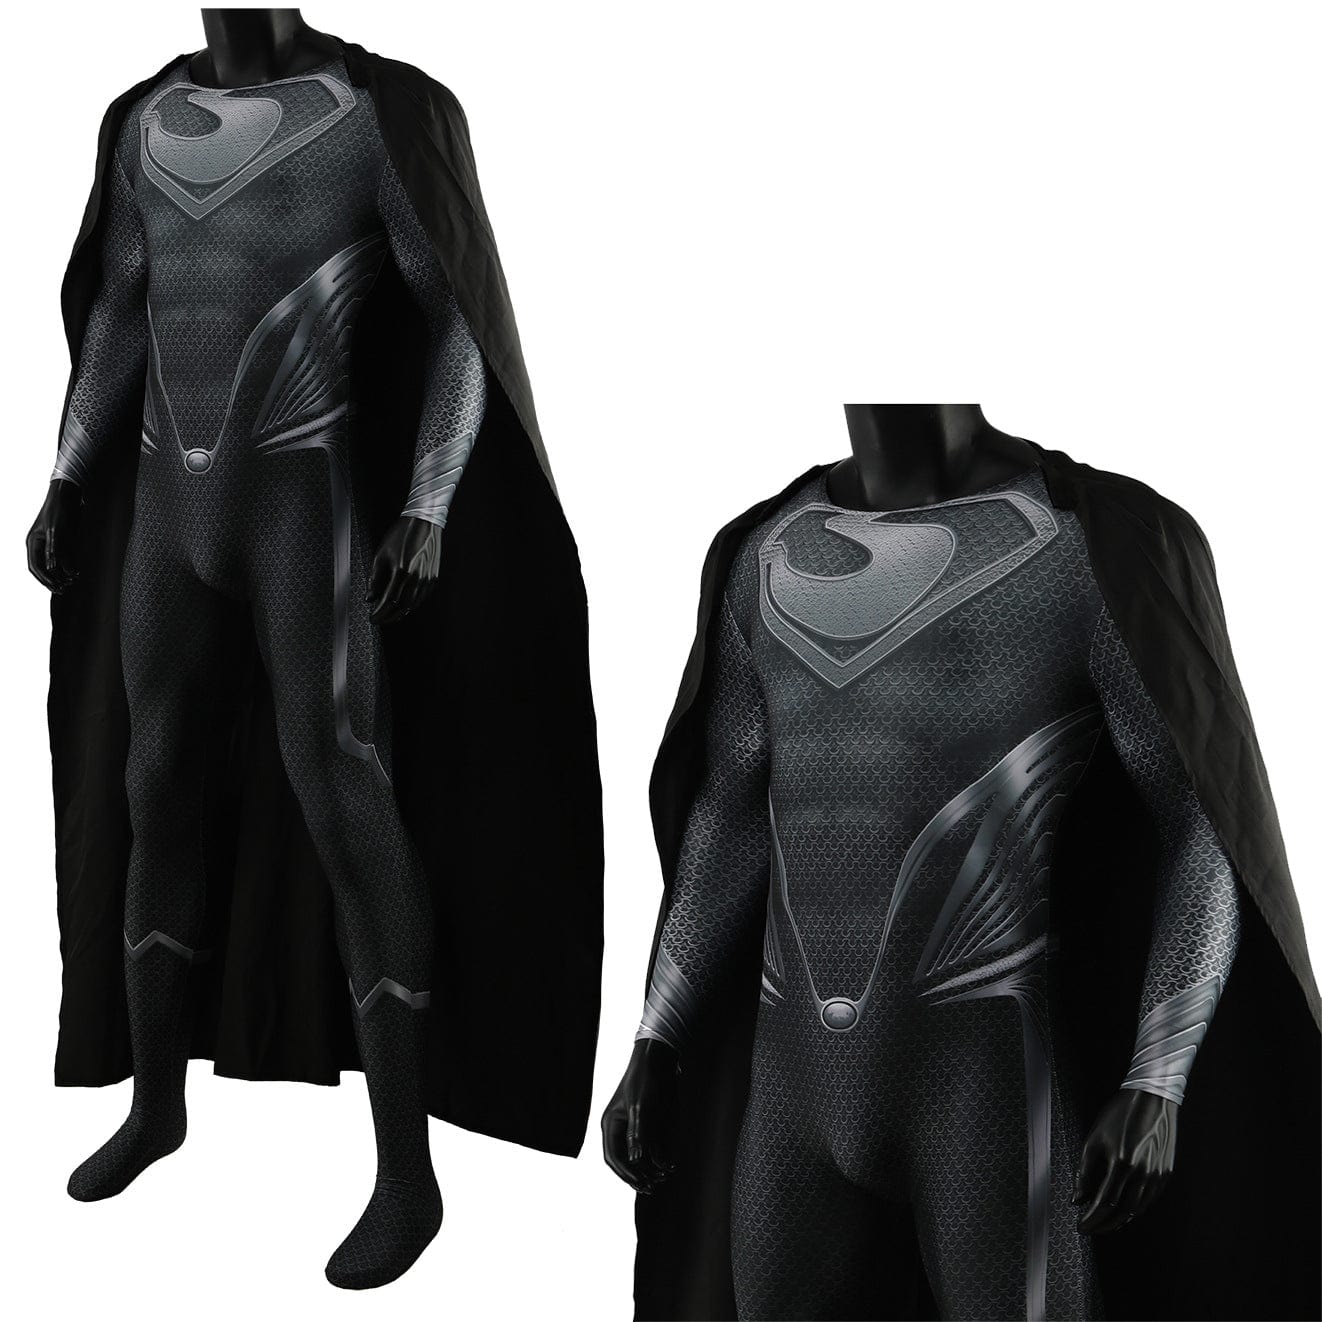 Black Superman The Man of Steel Jumpsuits Costume Adult Bodysuit